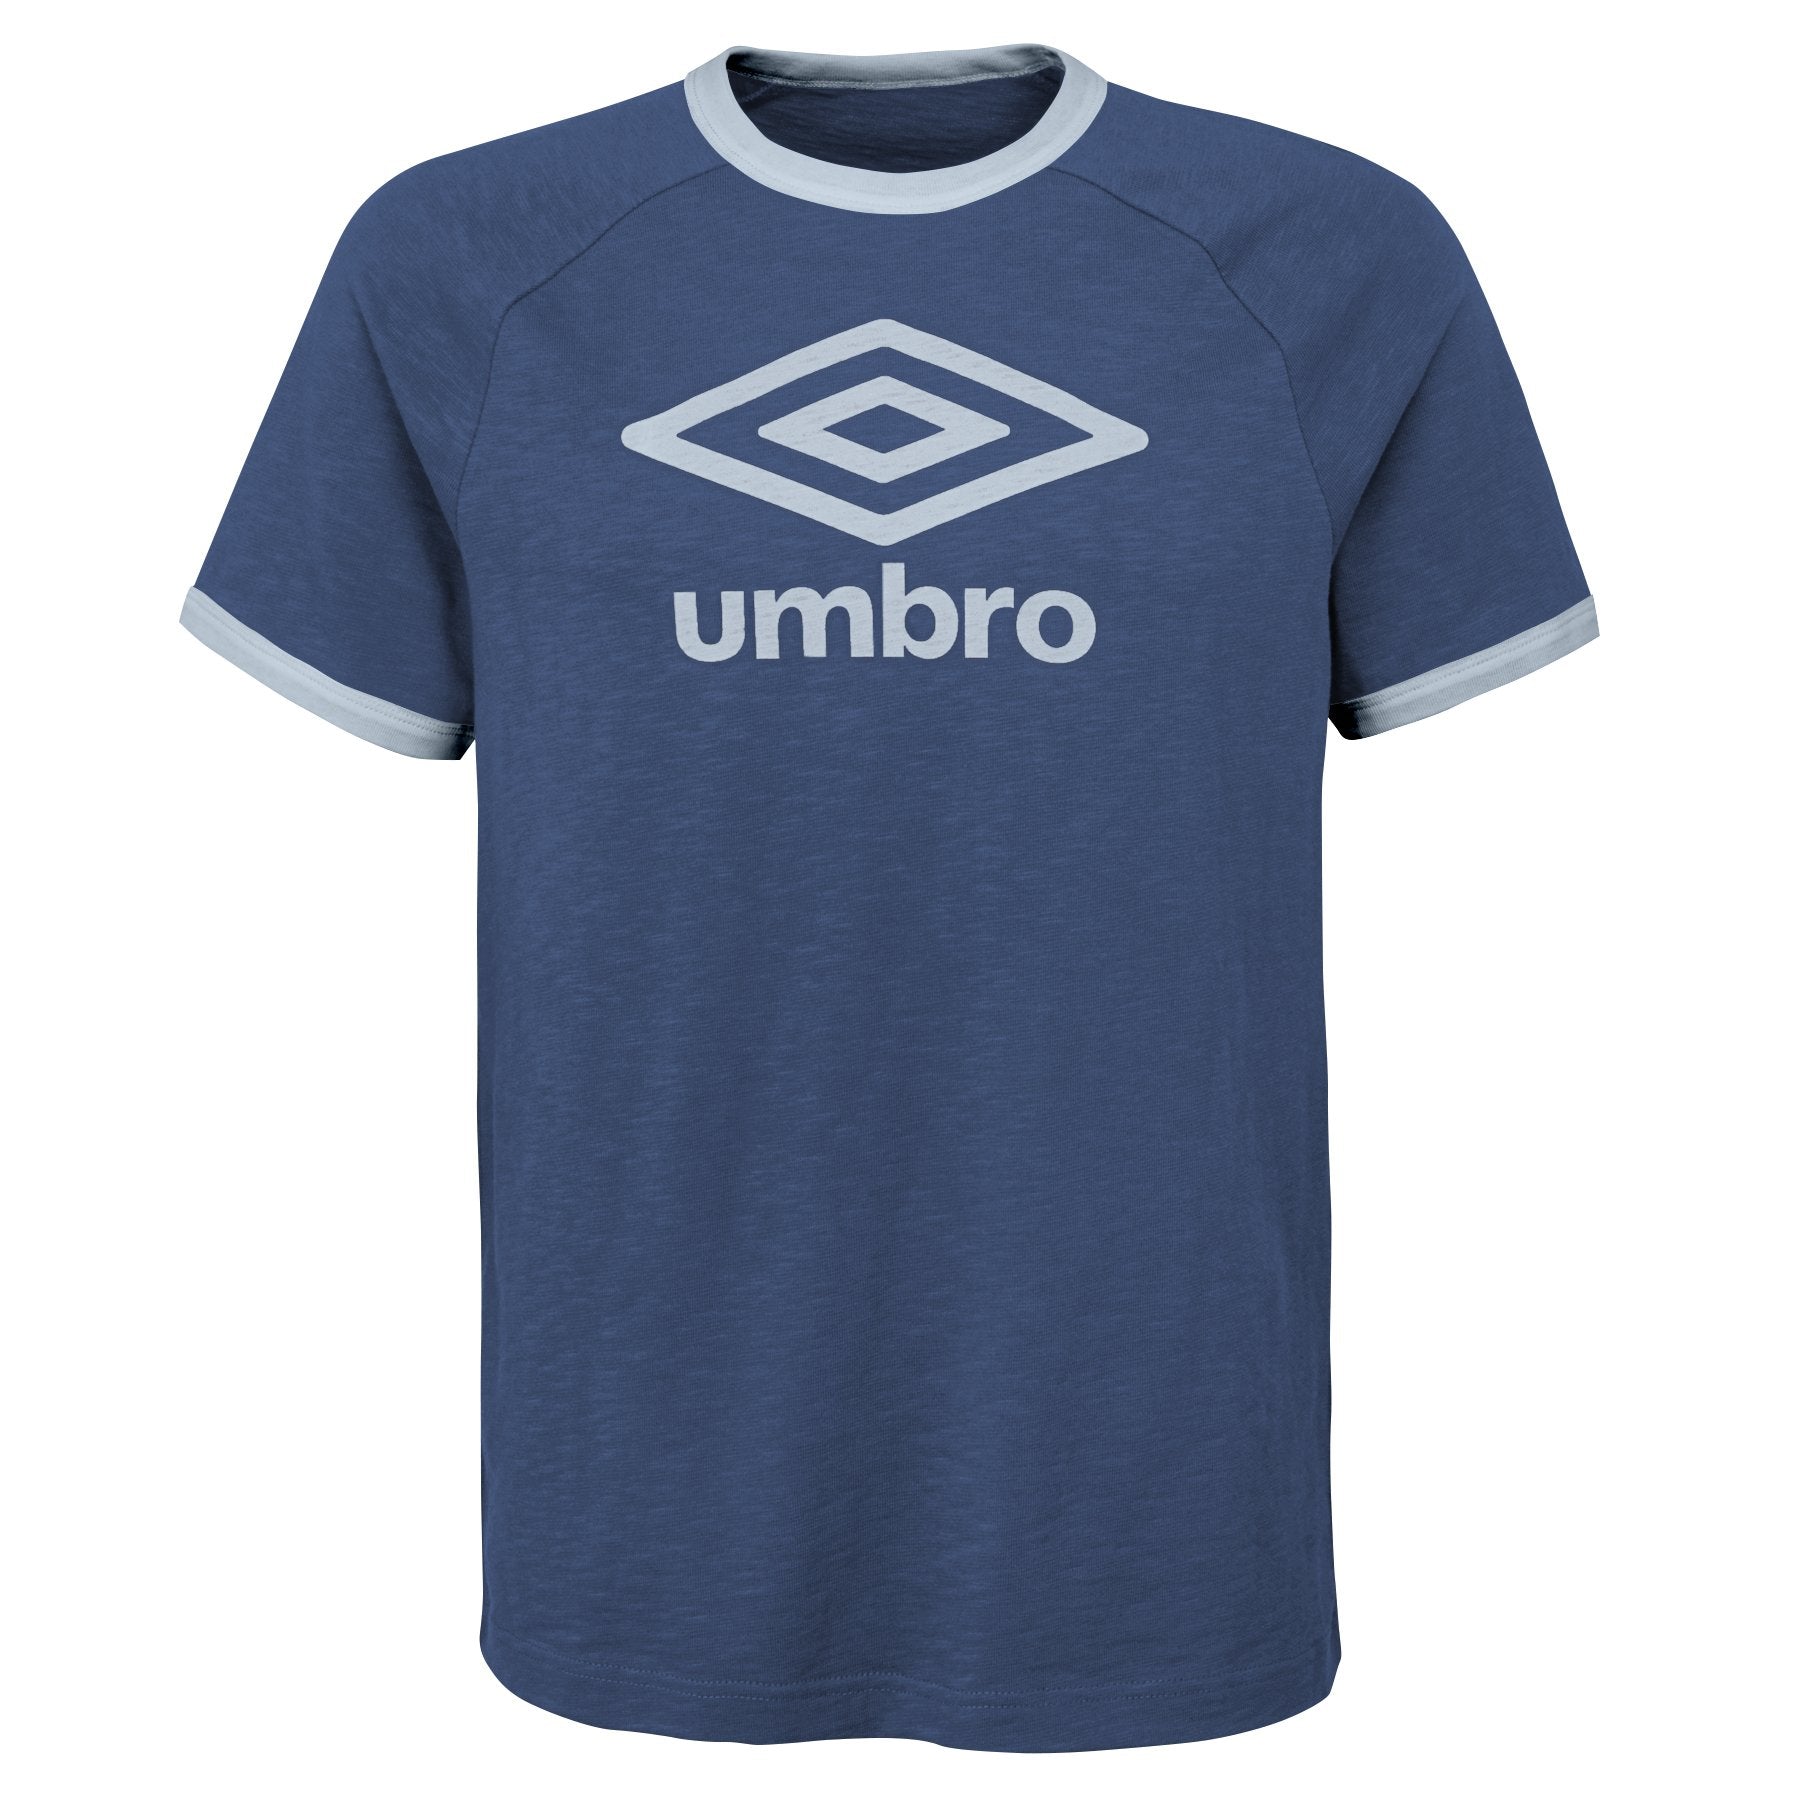 Umbro Men's Cotton Logo T-Shirt-Navy